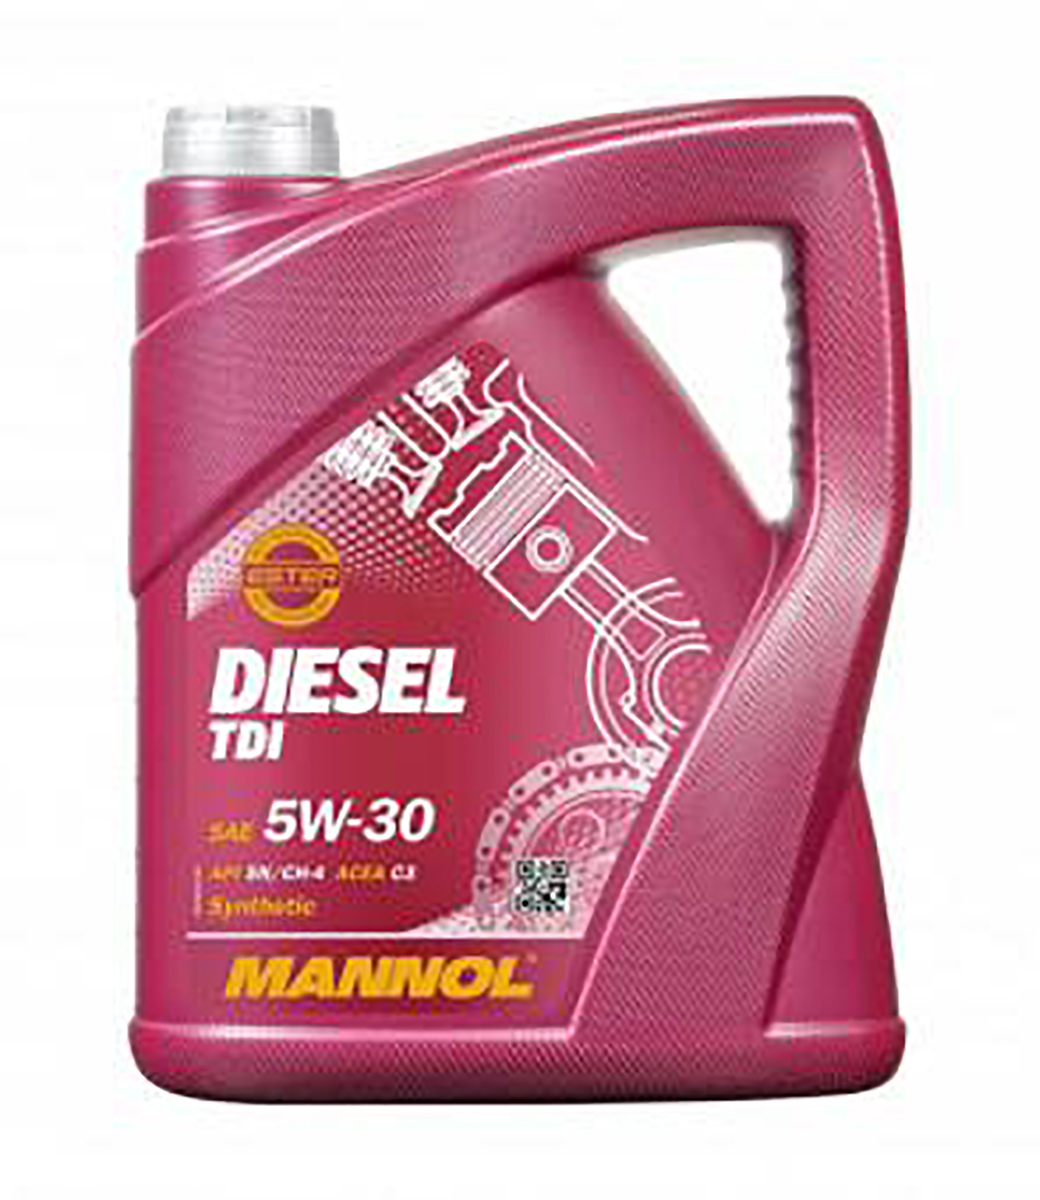 Diesel TDI 5W-30